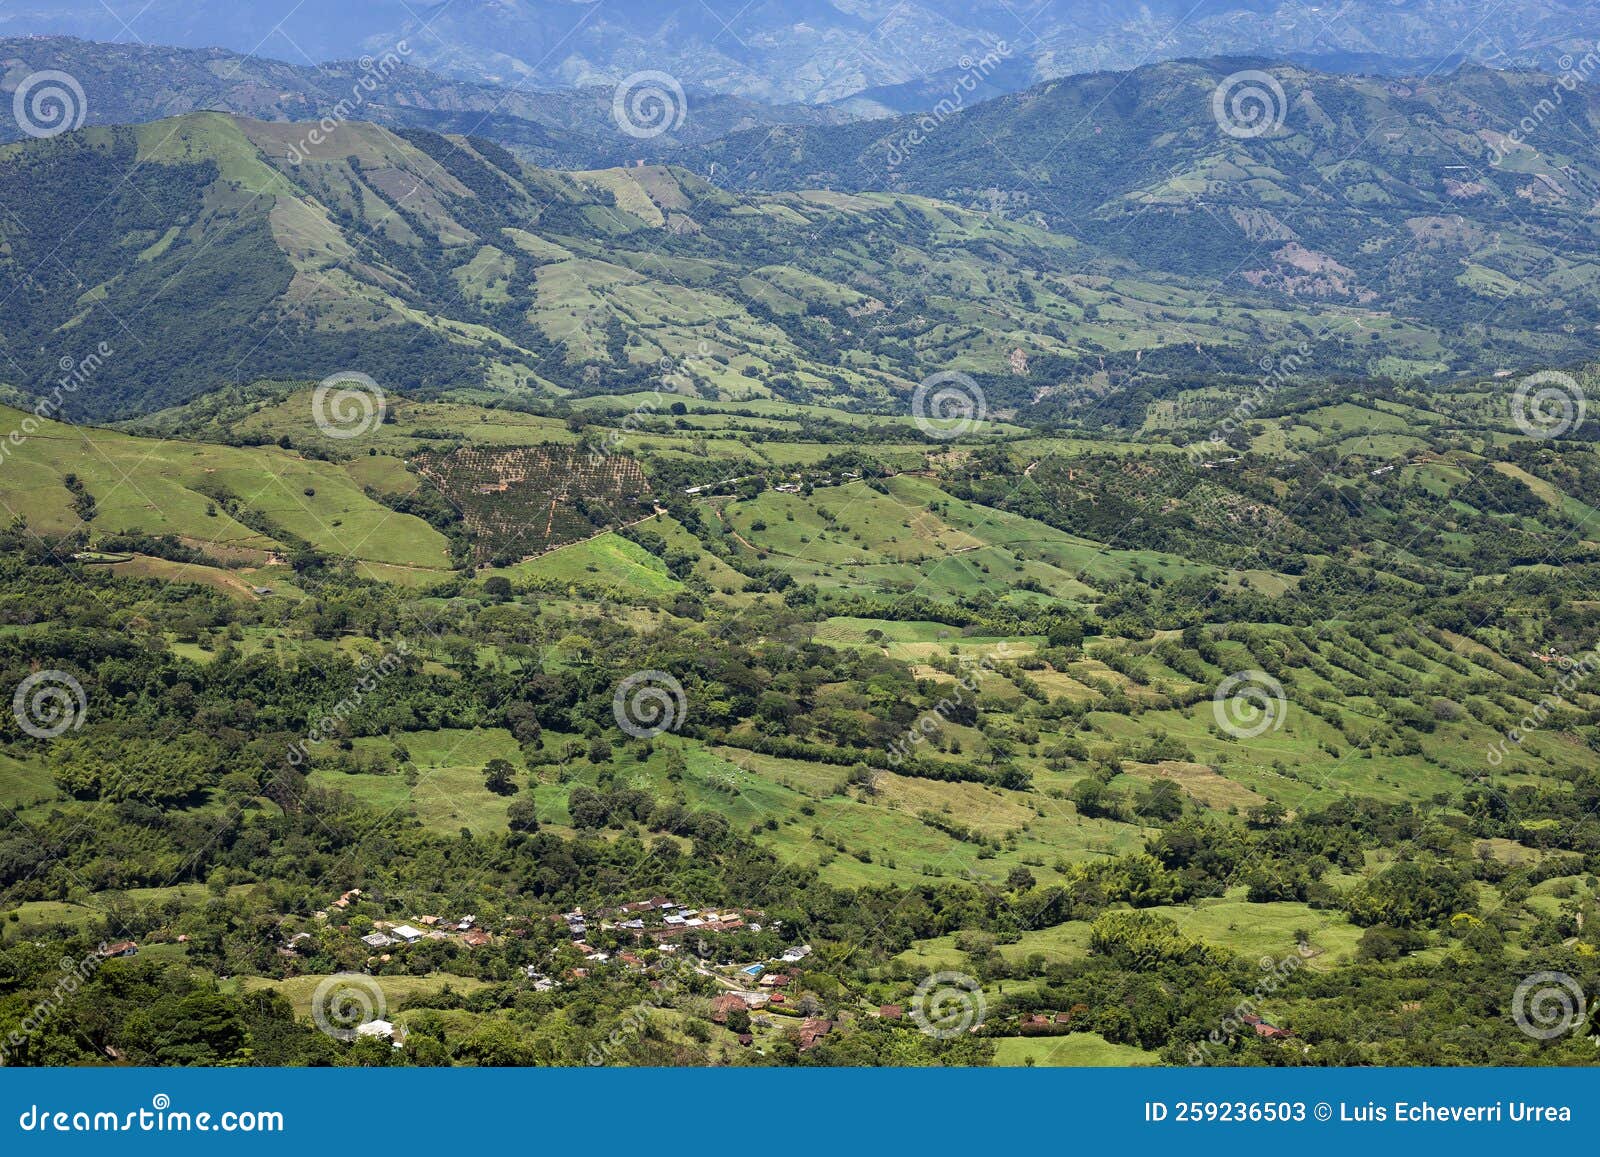 mountainous landscape of southwest antioquia - mountains, blue sky and trees